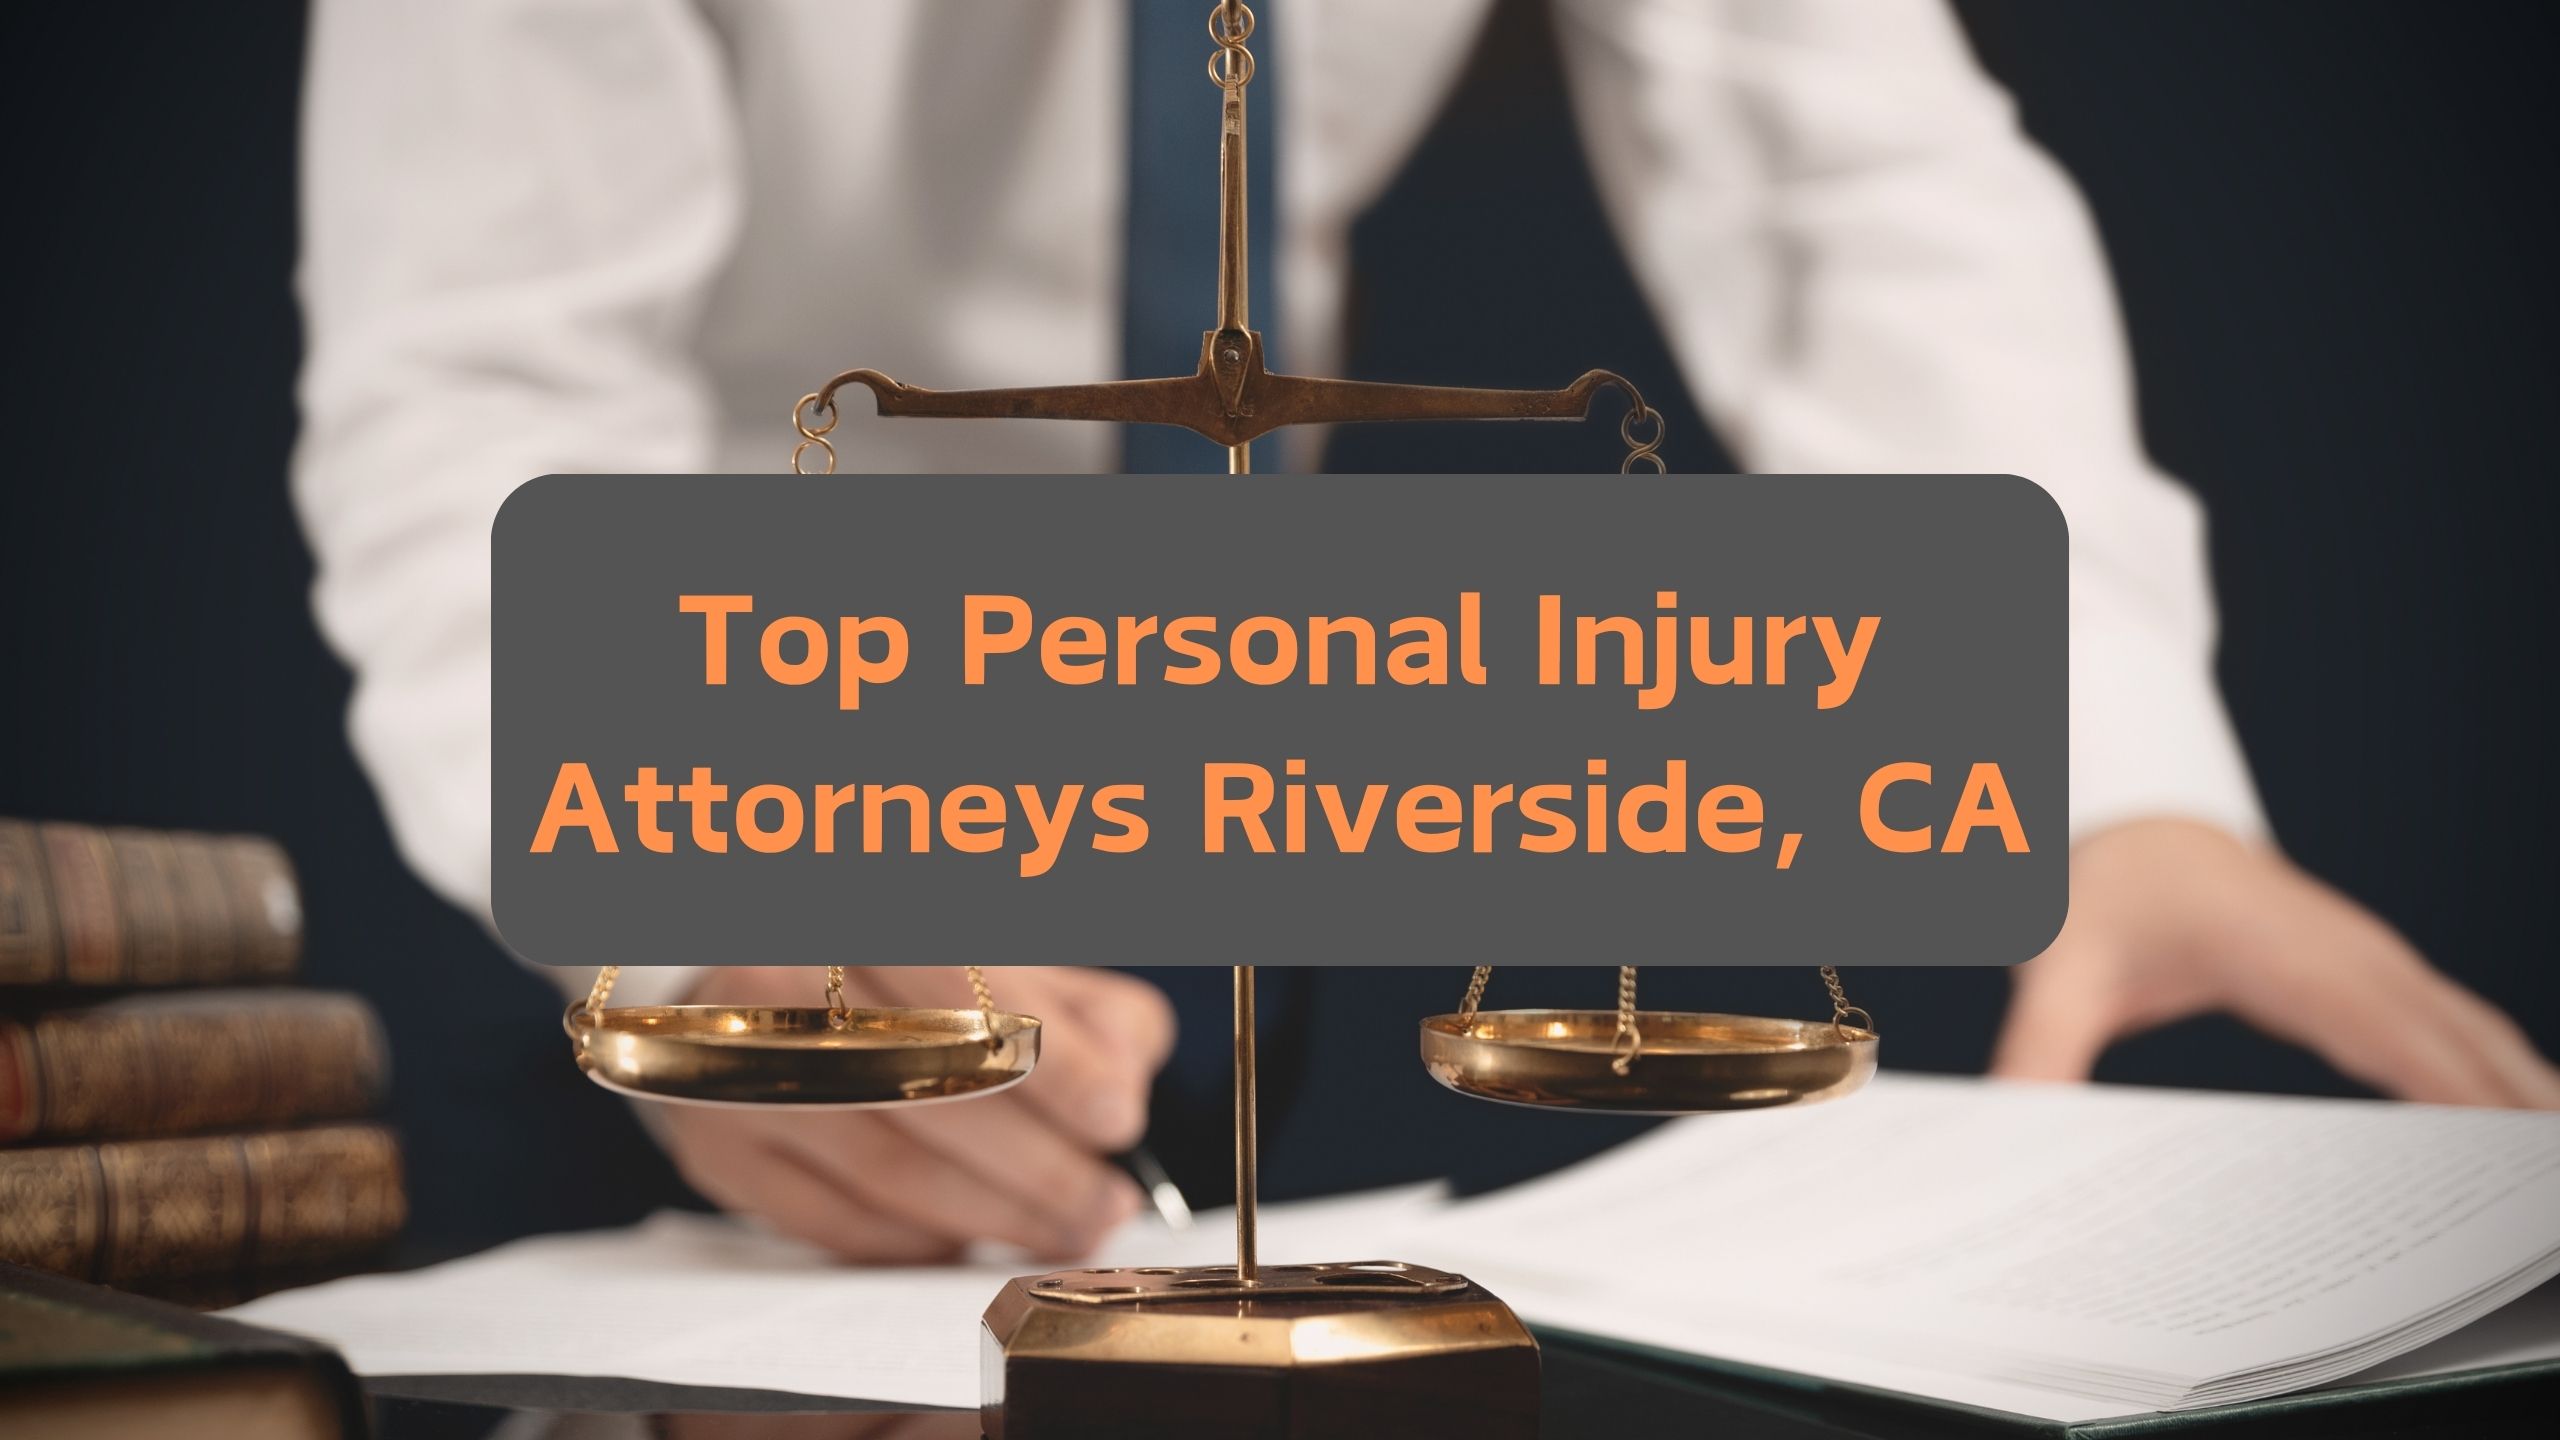 Top Personal Injury Attorneys Riverside